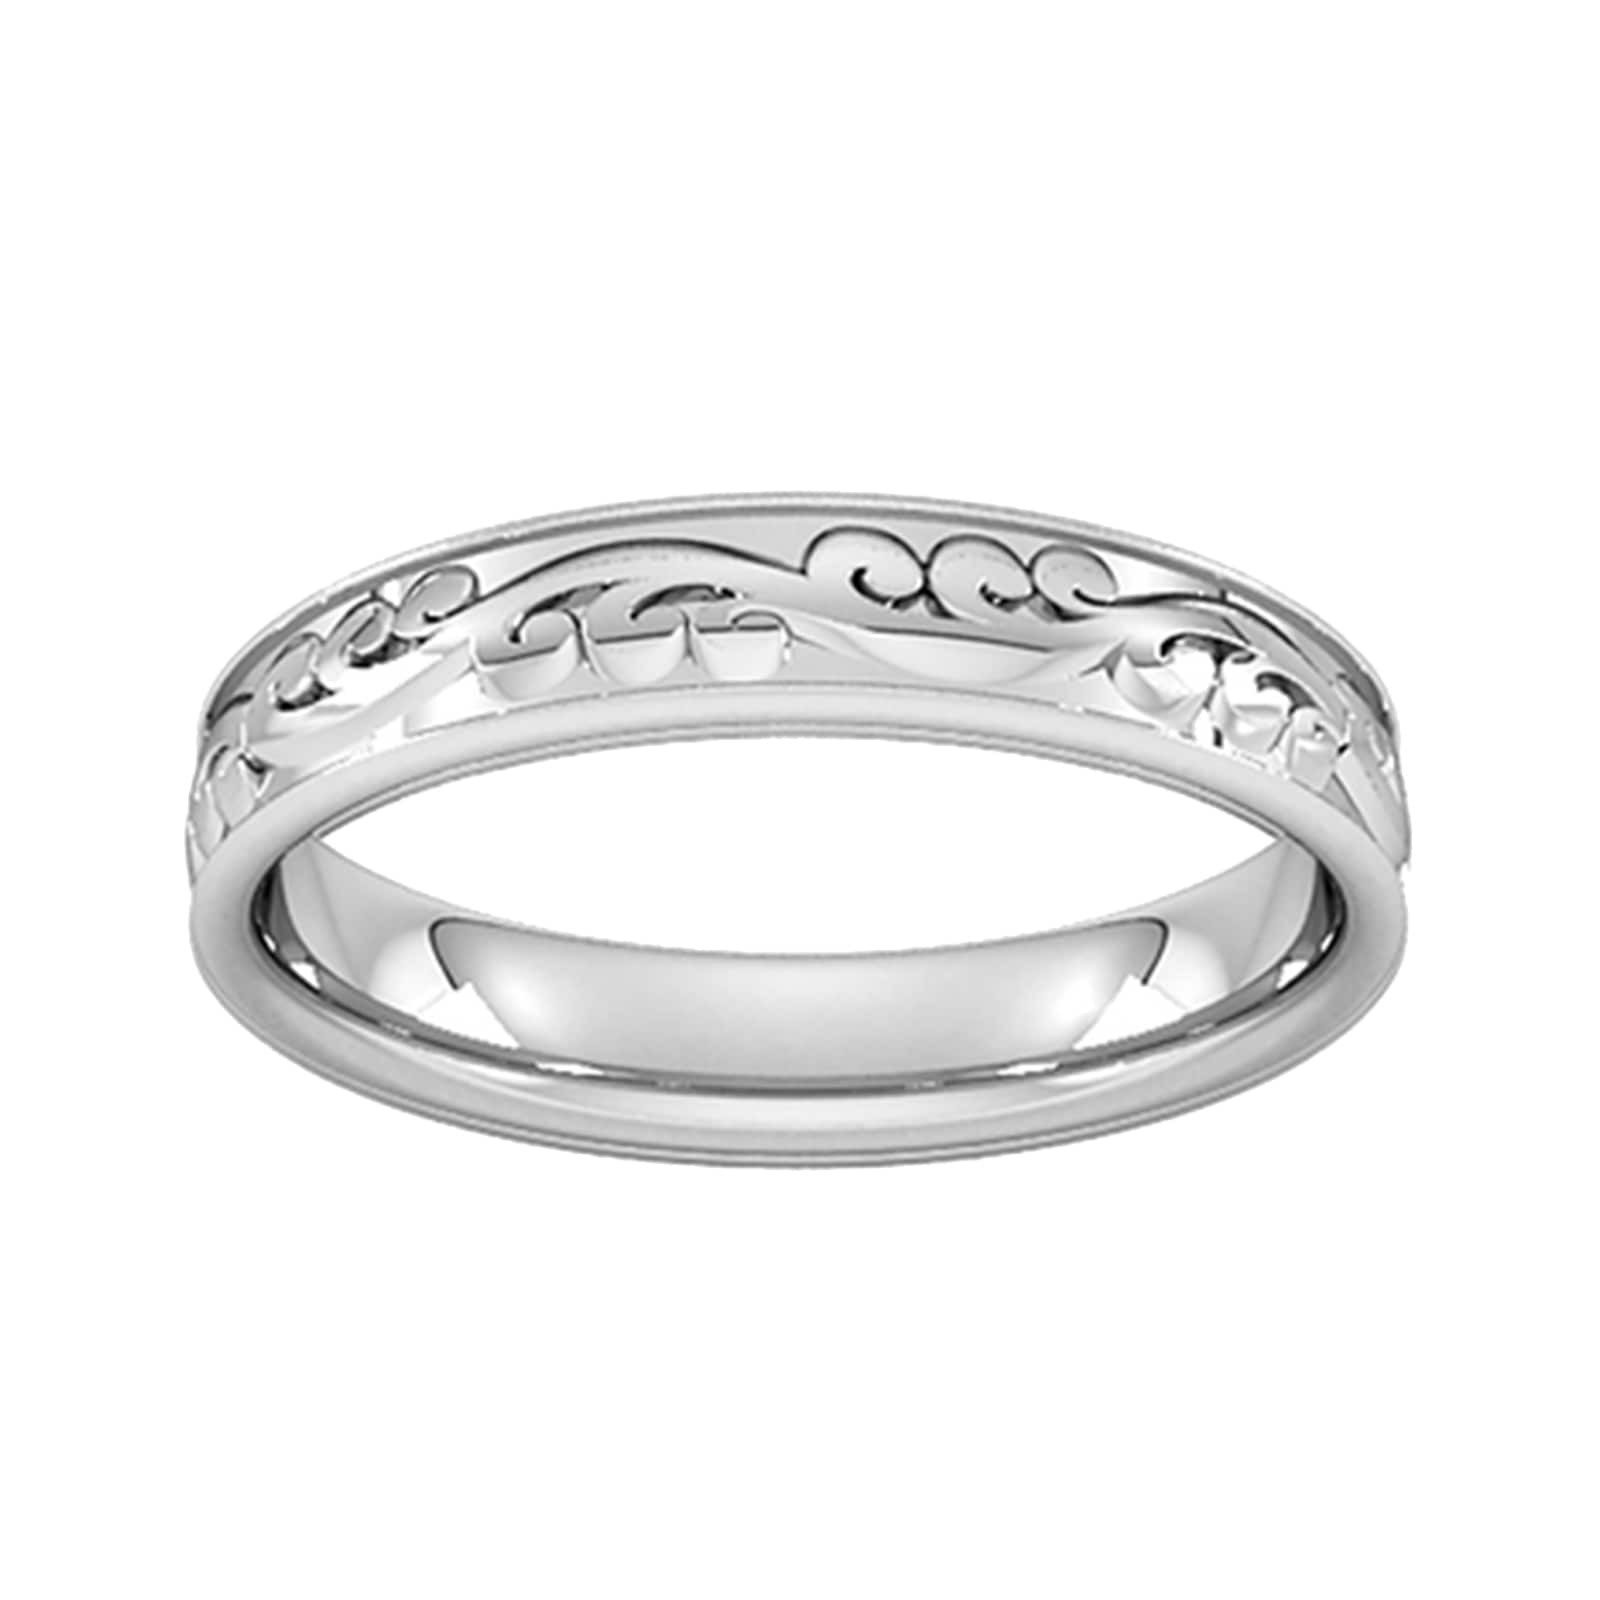 4mm Hand Engraved Wedding Ring In 18 Carat White Gold - Ring Size U